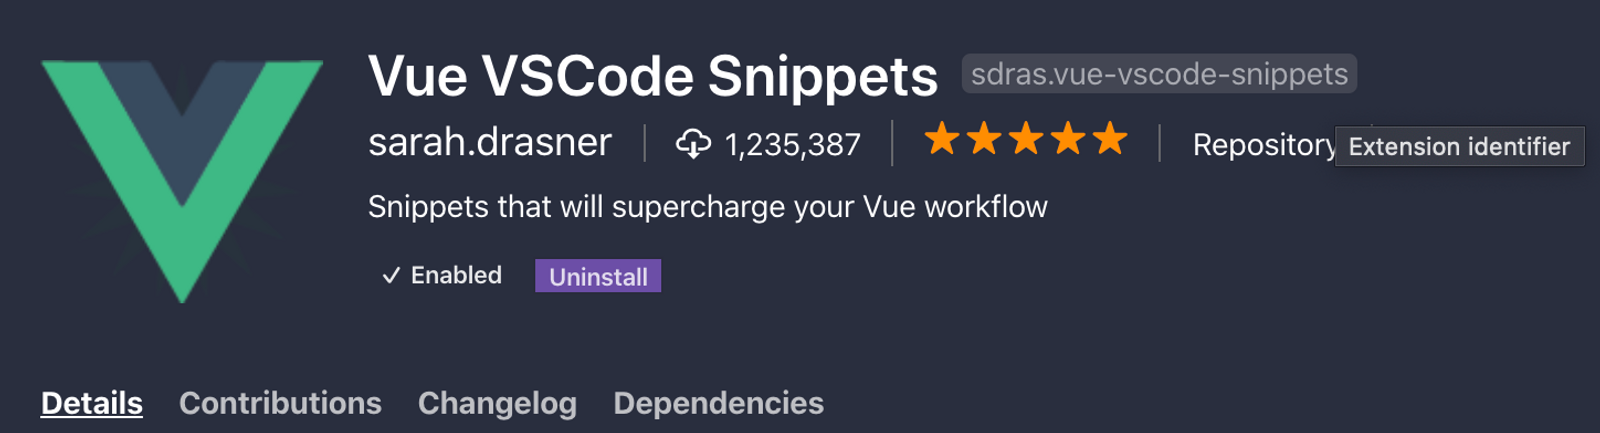 Vue VSCode Snippets